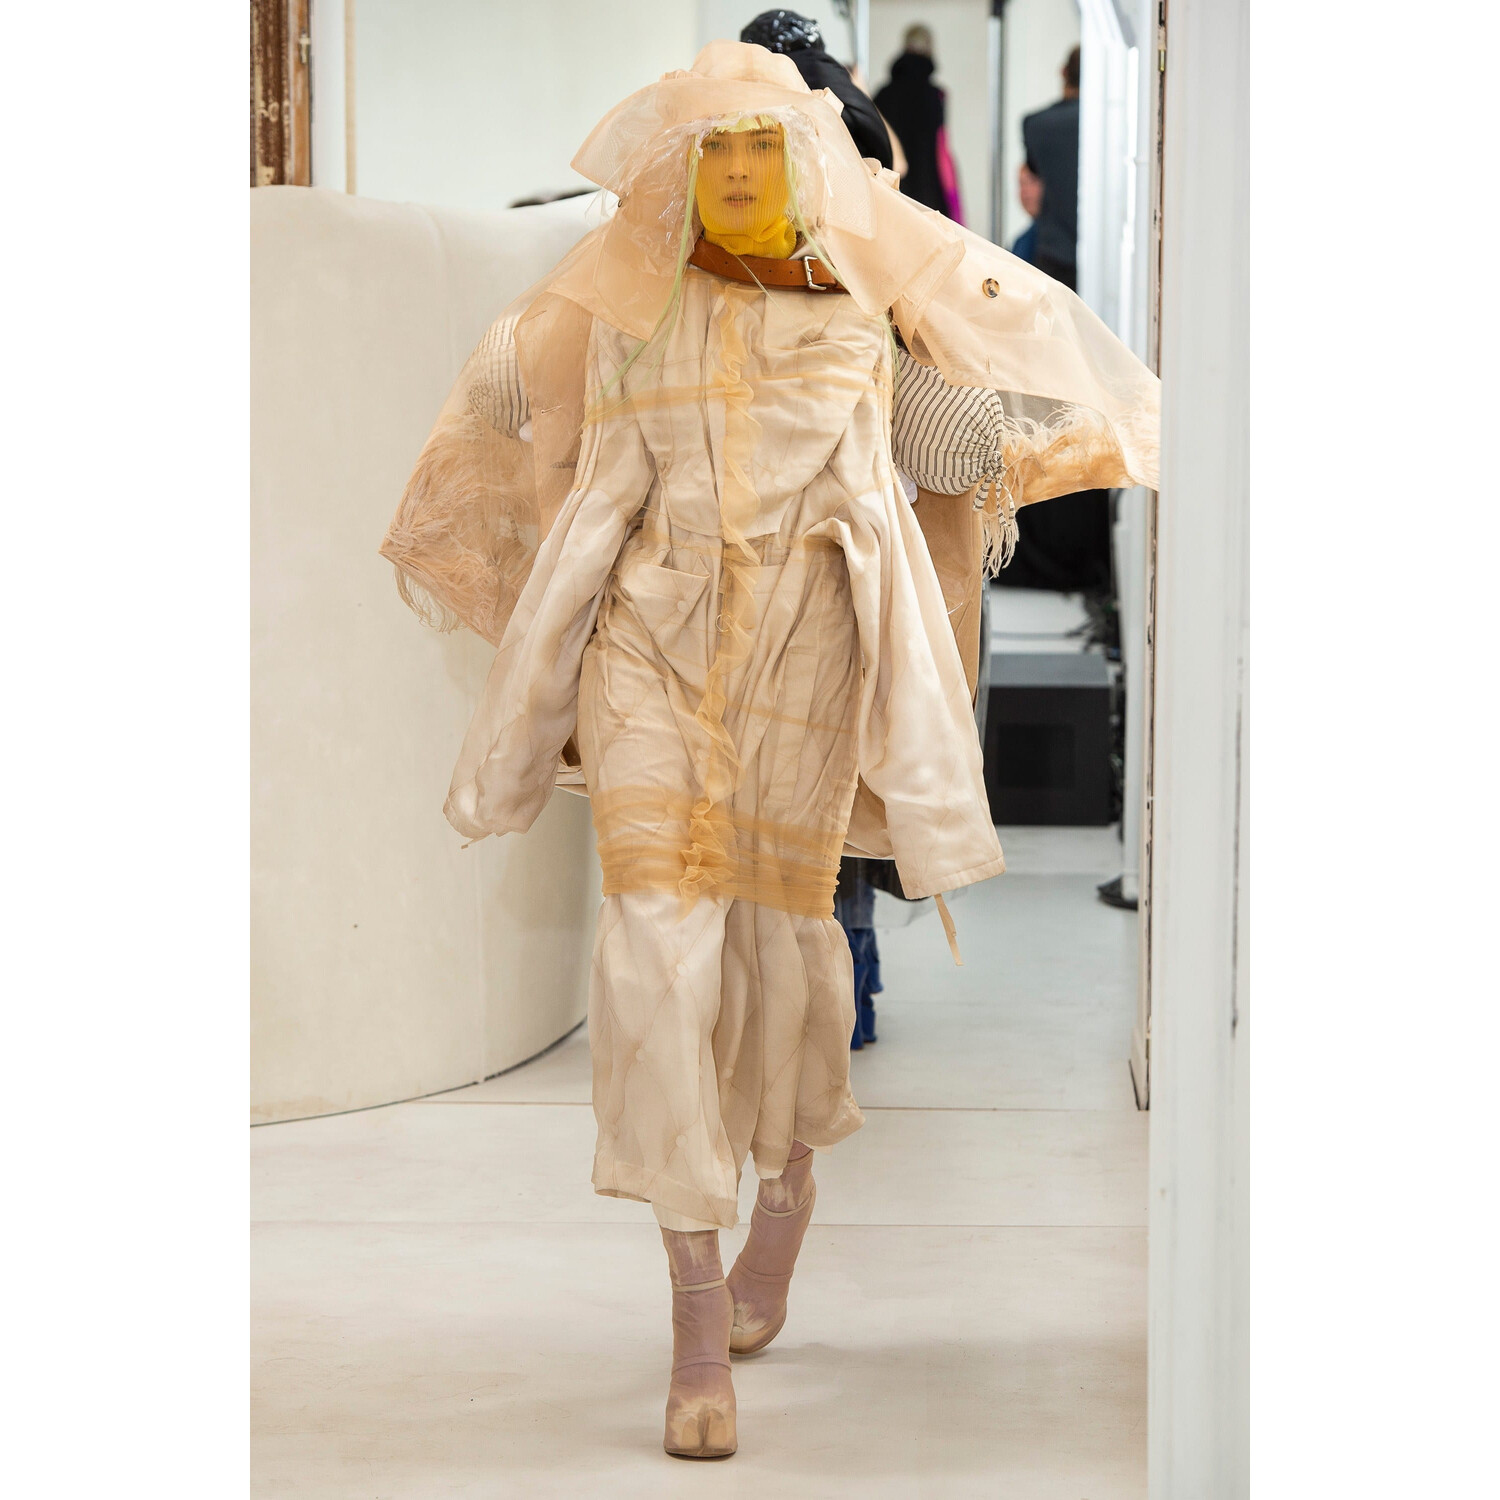 Фото Maison Margiela Fall 2018 Couture Collection / Maison Margiela Осень 2018 Кутюр коллекция